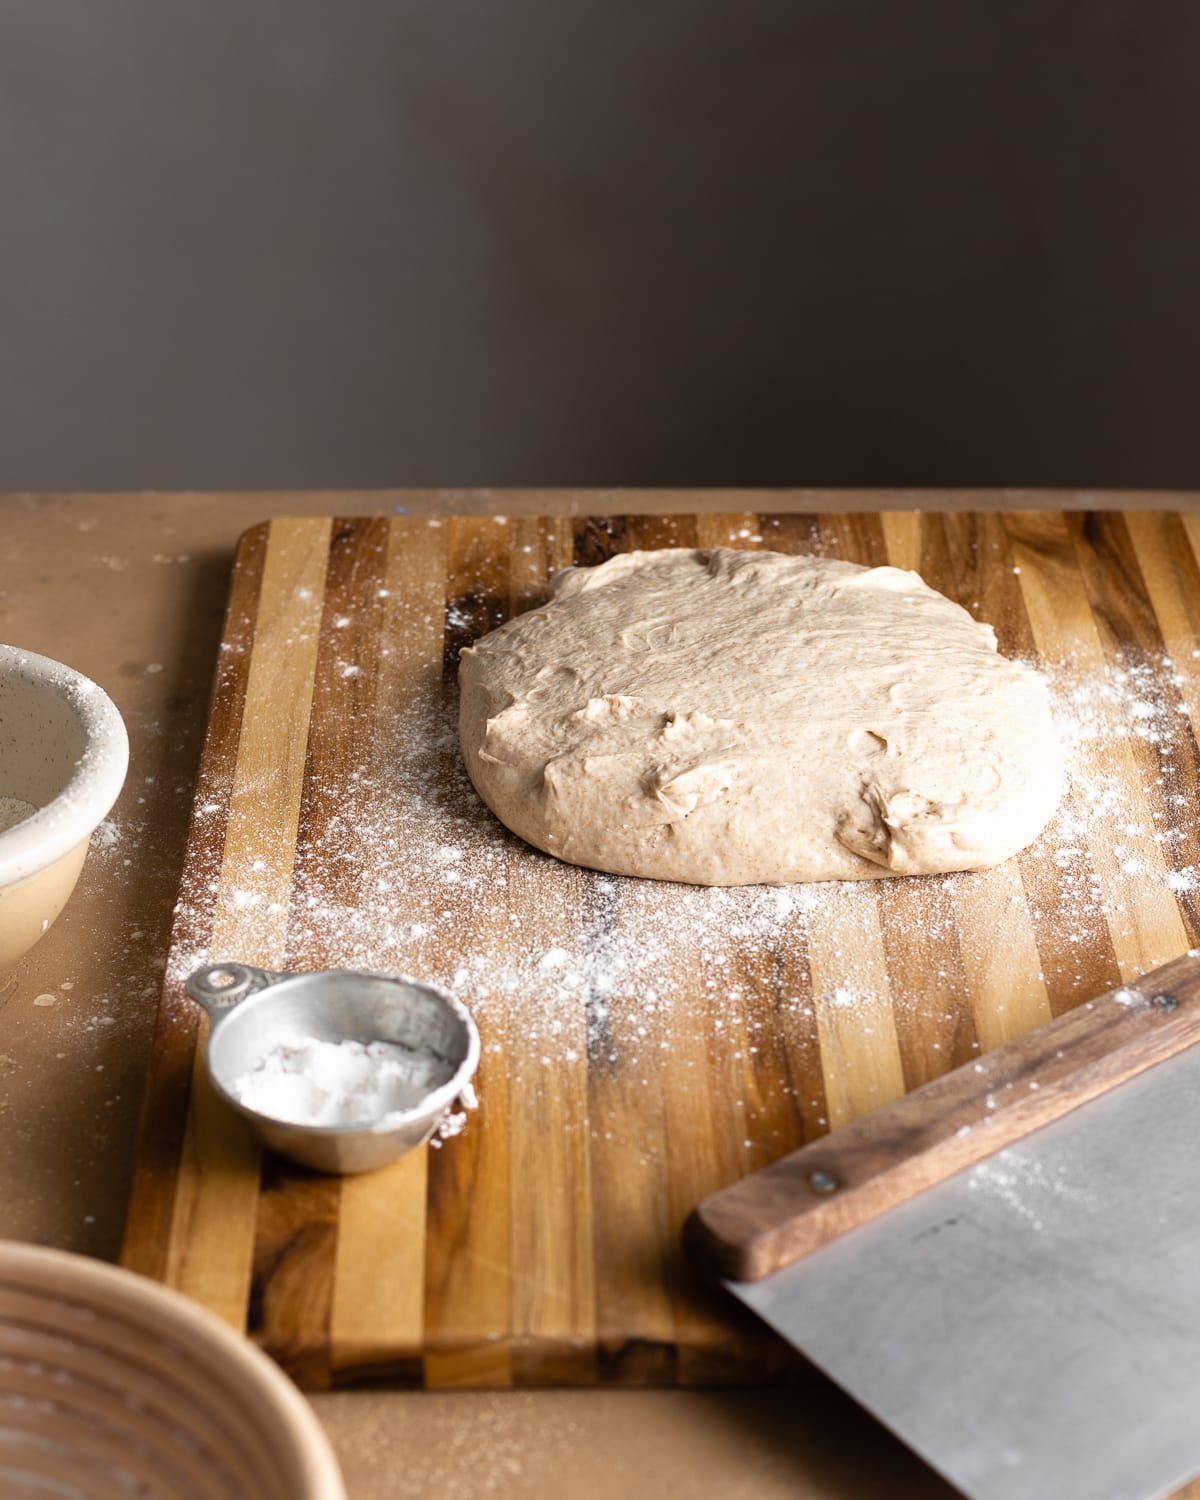 unshaped dough on a wood cutting board